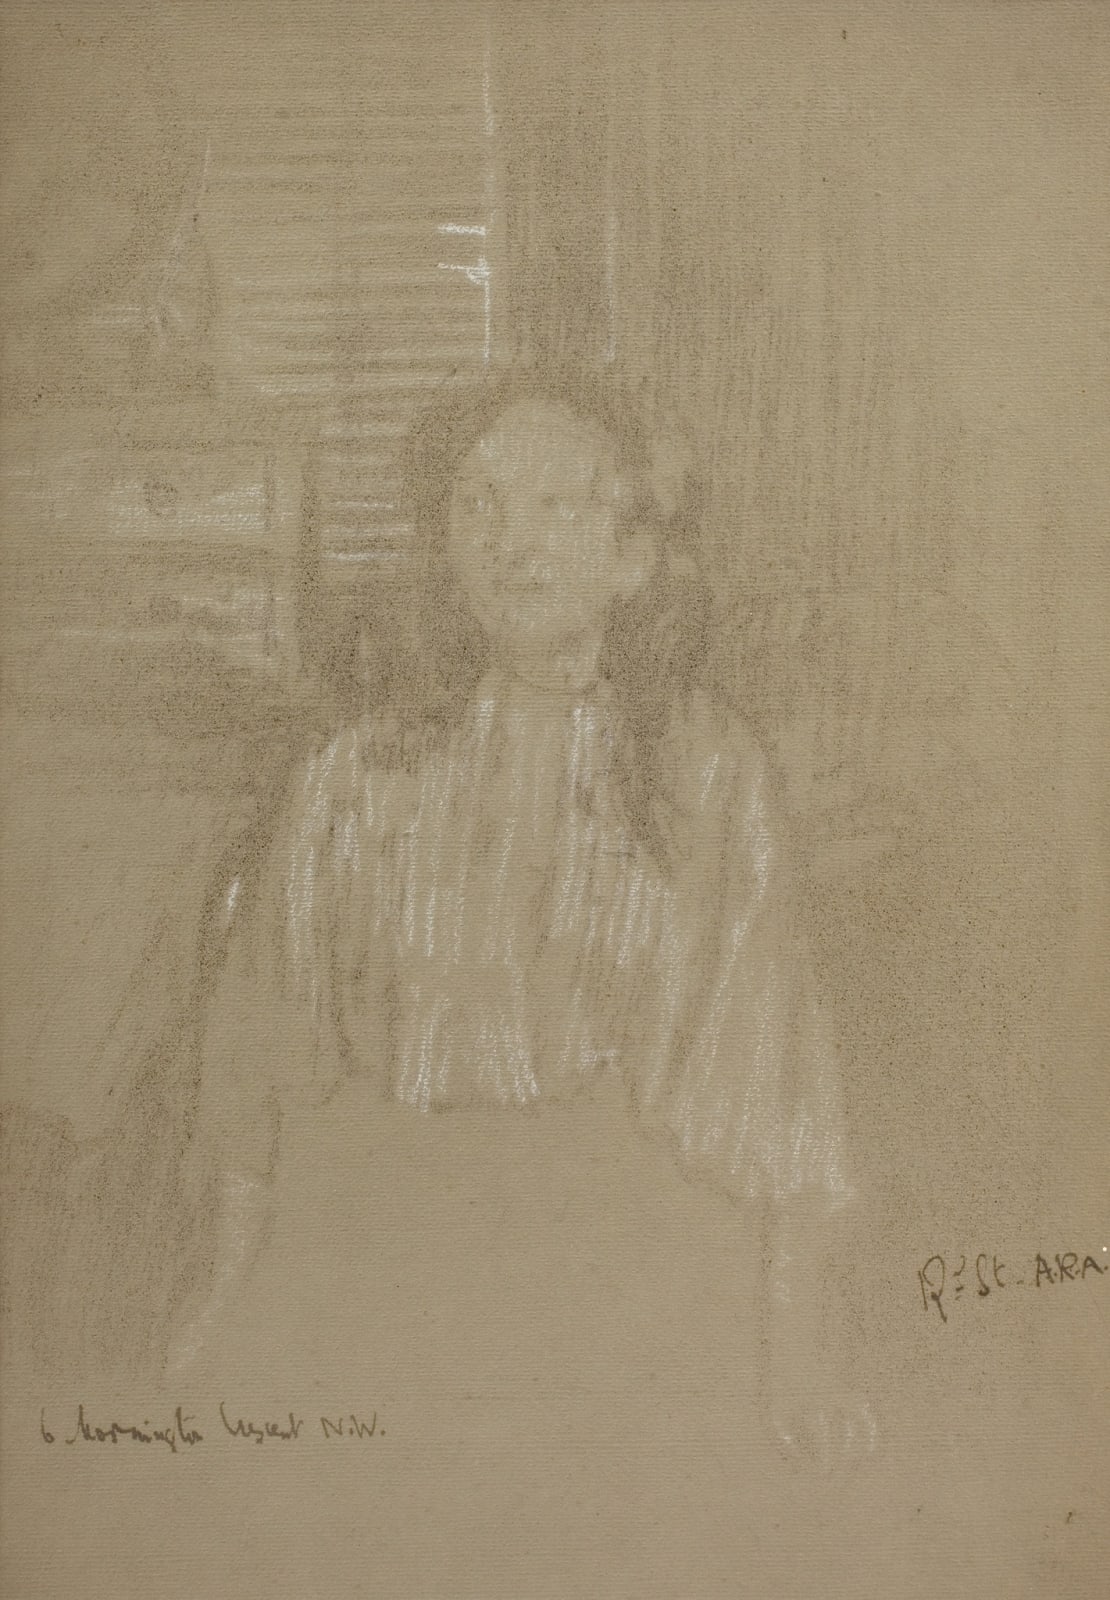 Walter Sickert, 6 Mornington Crescent N.W., 1907